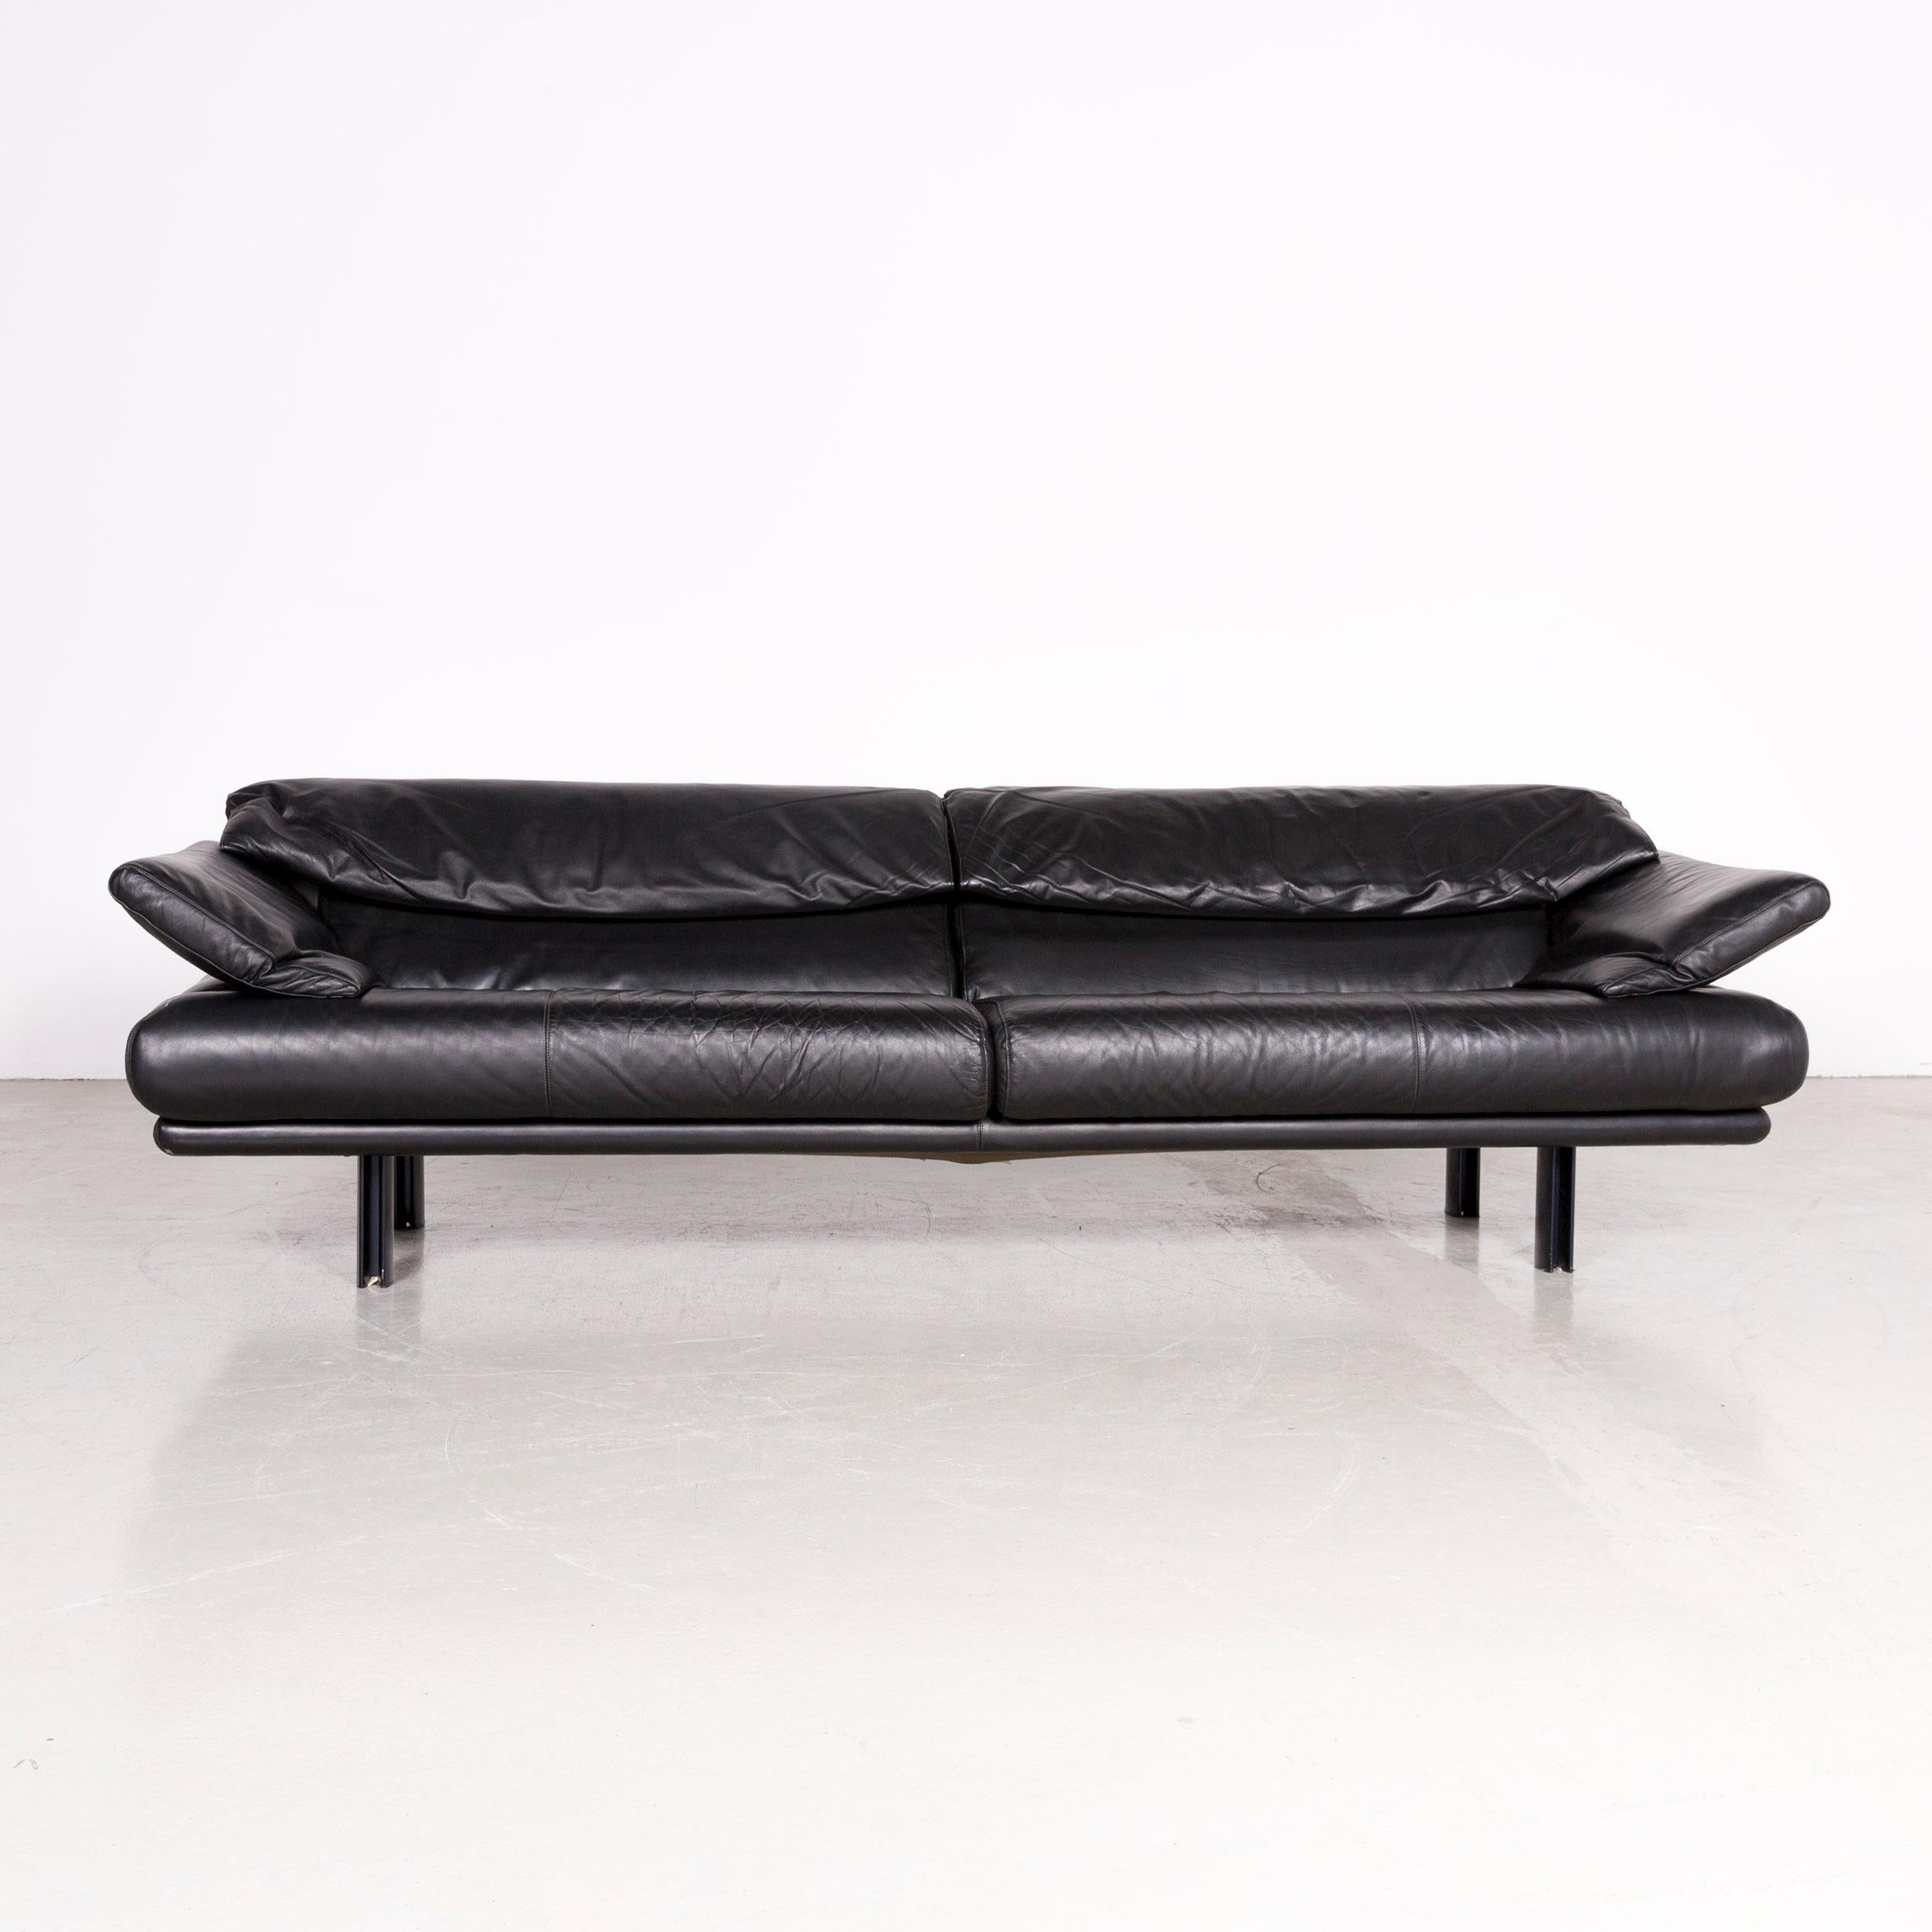 B&B Italia Alanda Designer Leather Sofa Set Black Three-Seat Couch Relax In Good Condition For Sale In Cologne, DE